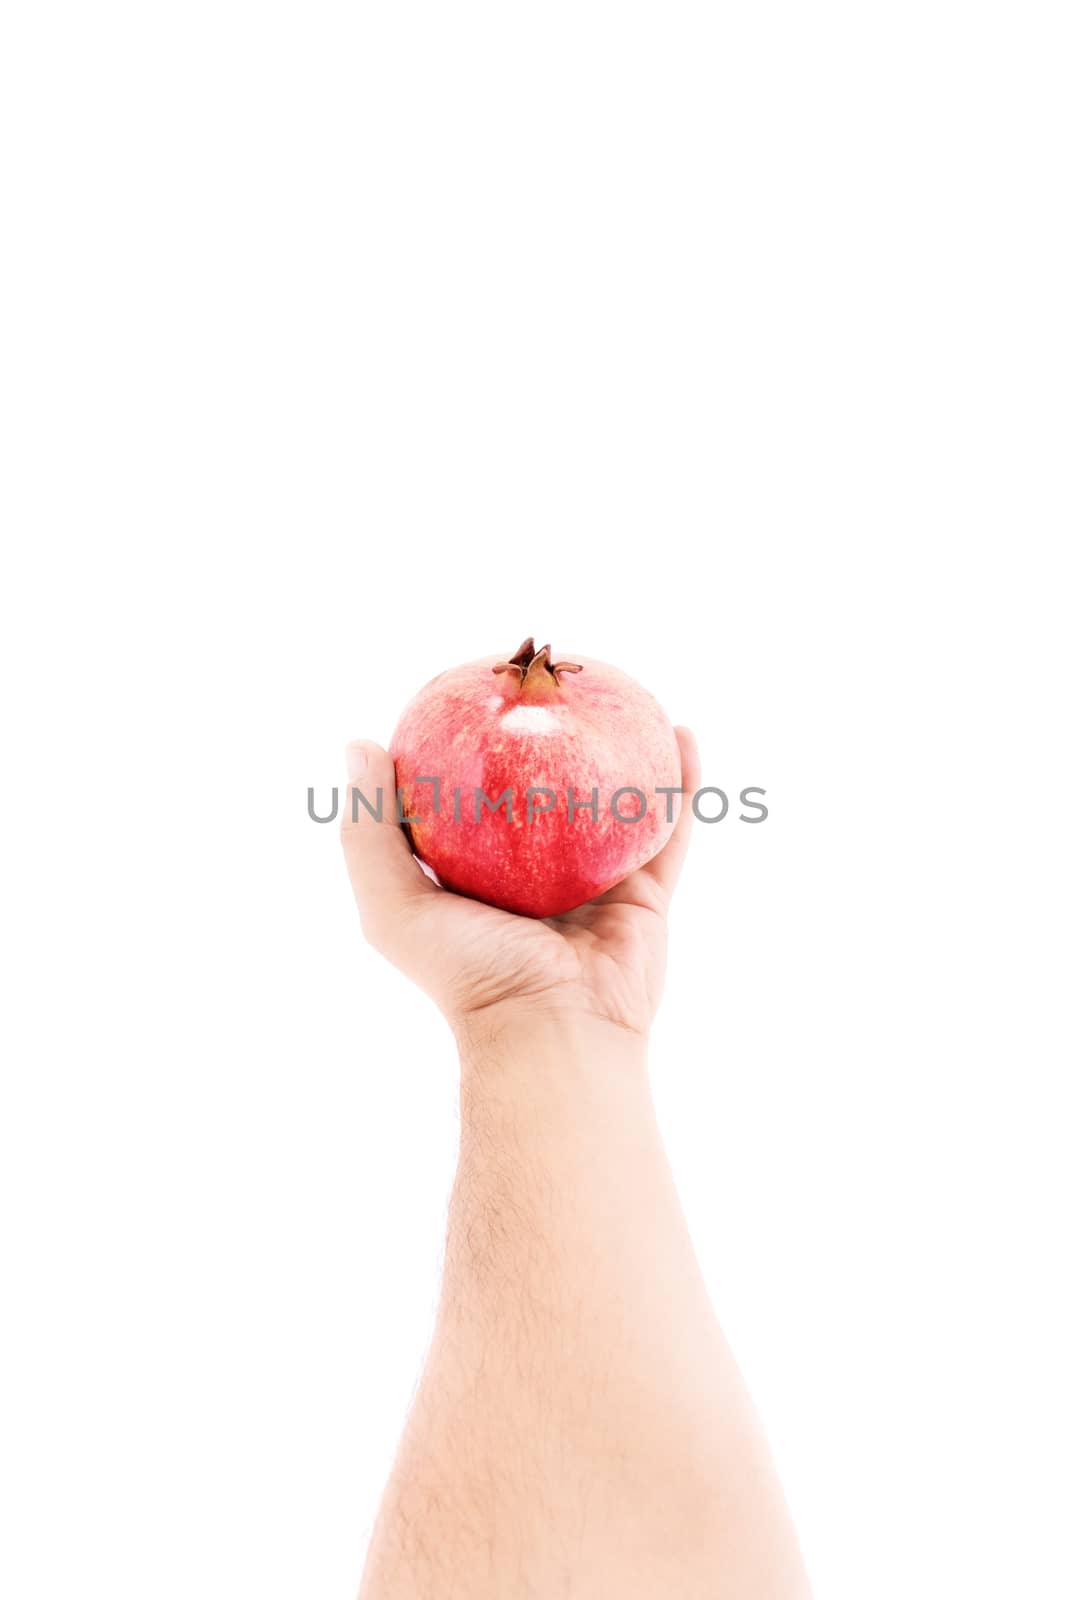 You like pomegranate by Mendelex